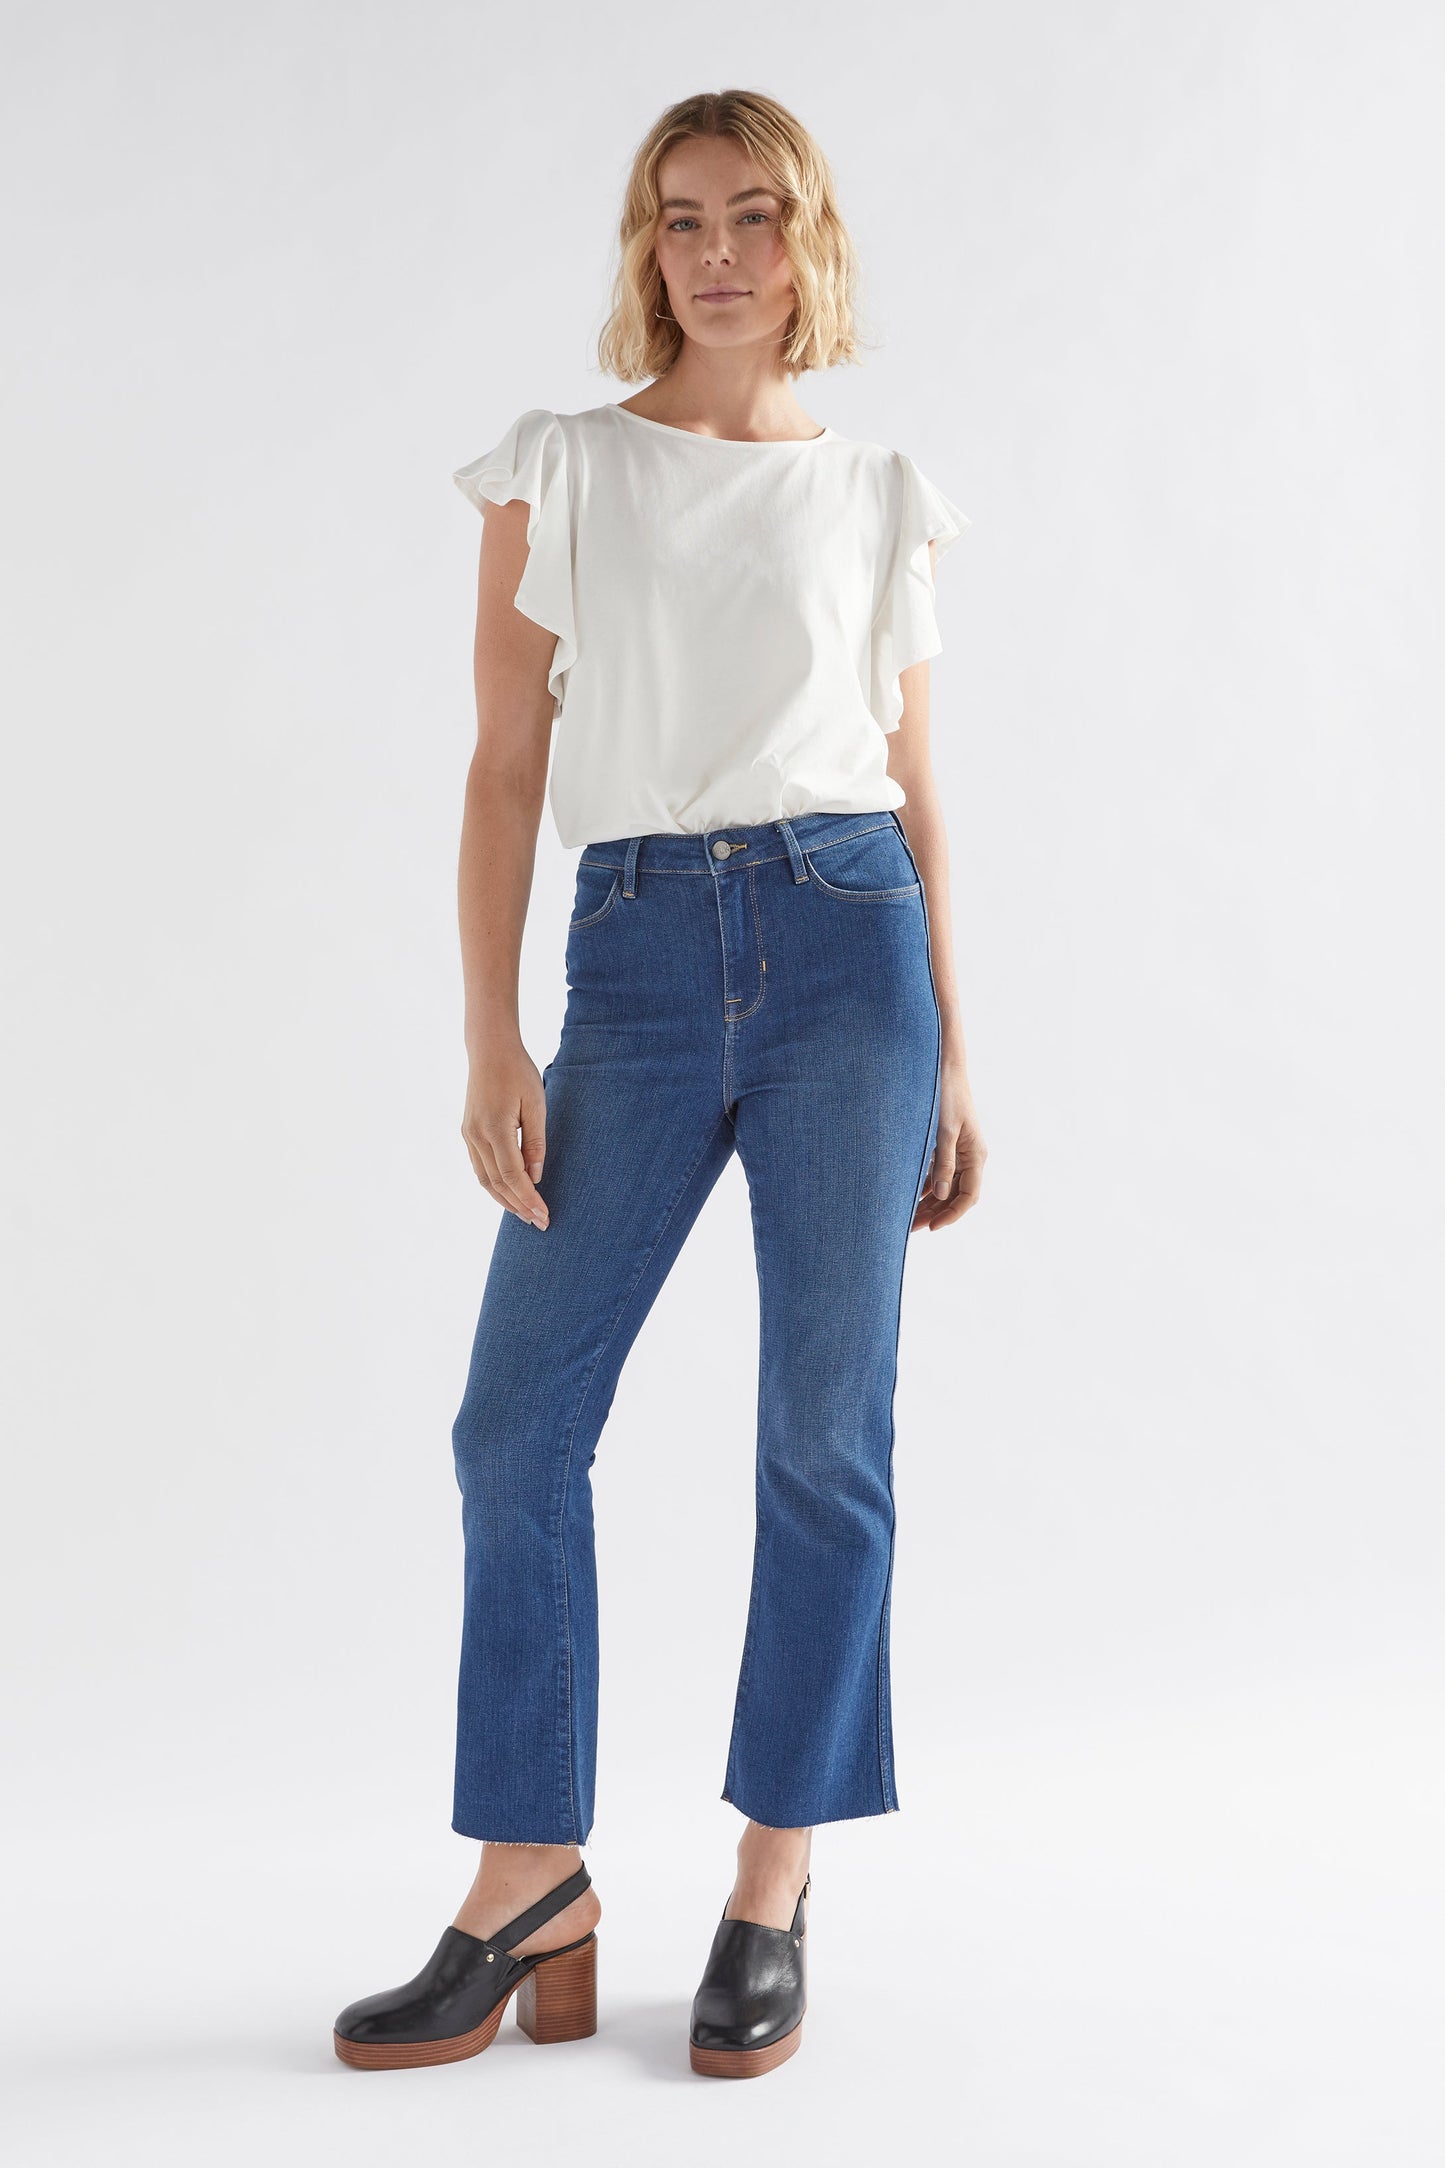 Kalen Organic Cotton Jersey Ruffle Sleeve Top Model Front Full Body | WHITE